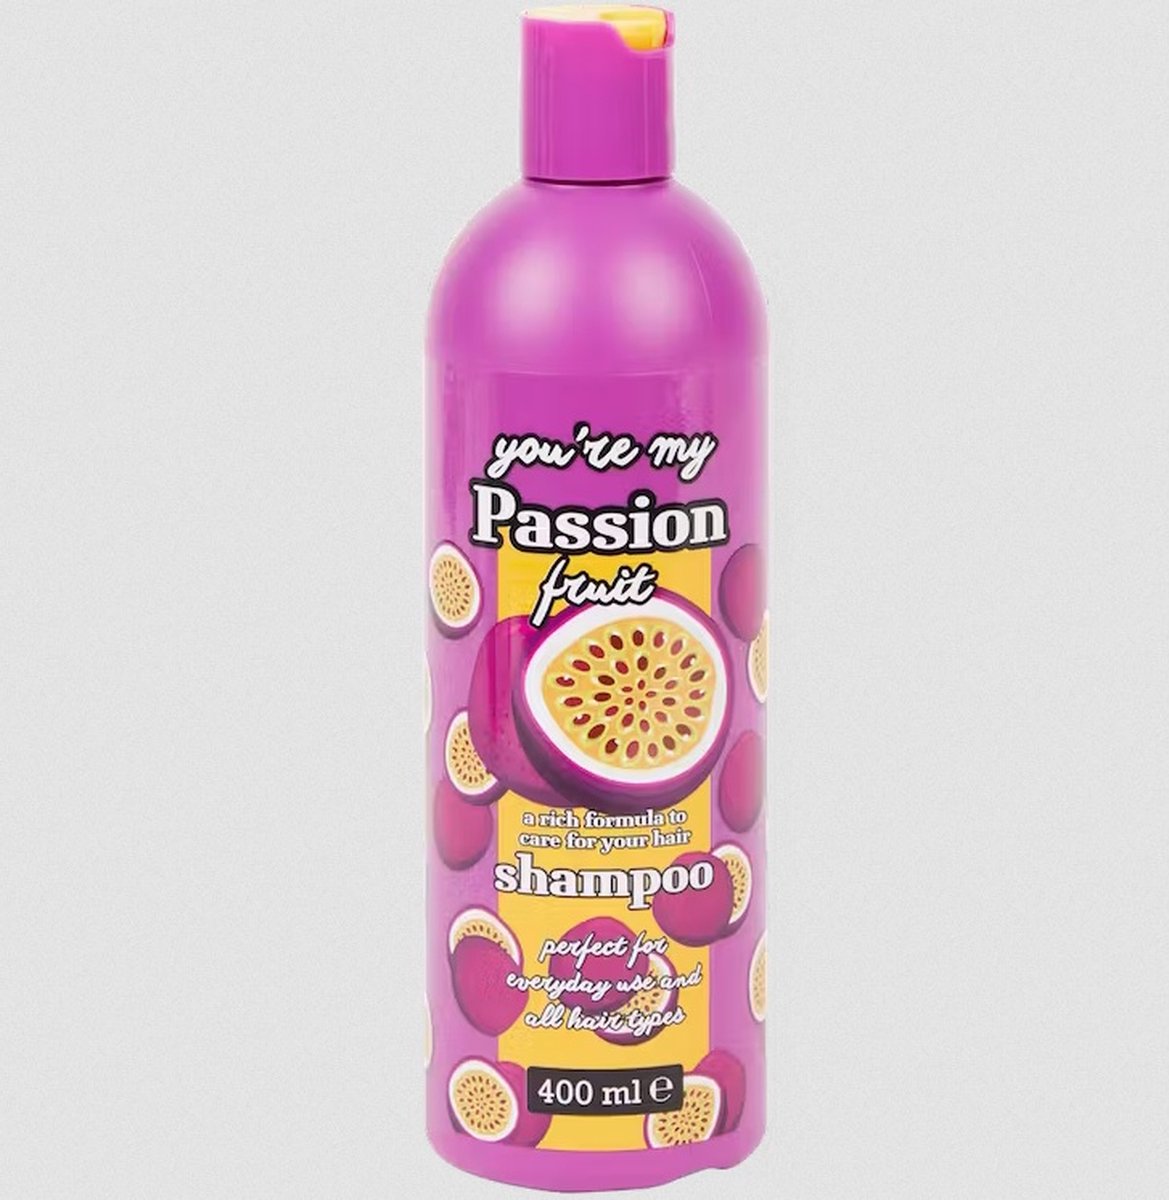 You're My Passion Fruit shampoo 400 ml - Passievrucht shampoo - Voor alledaags gebruik - Passionfruit - Vegan